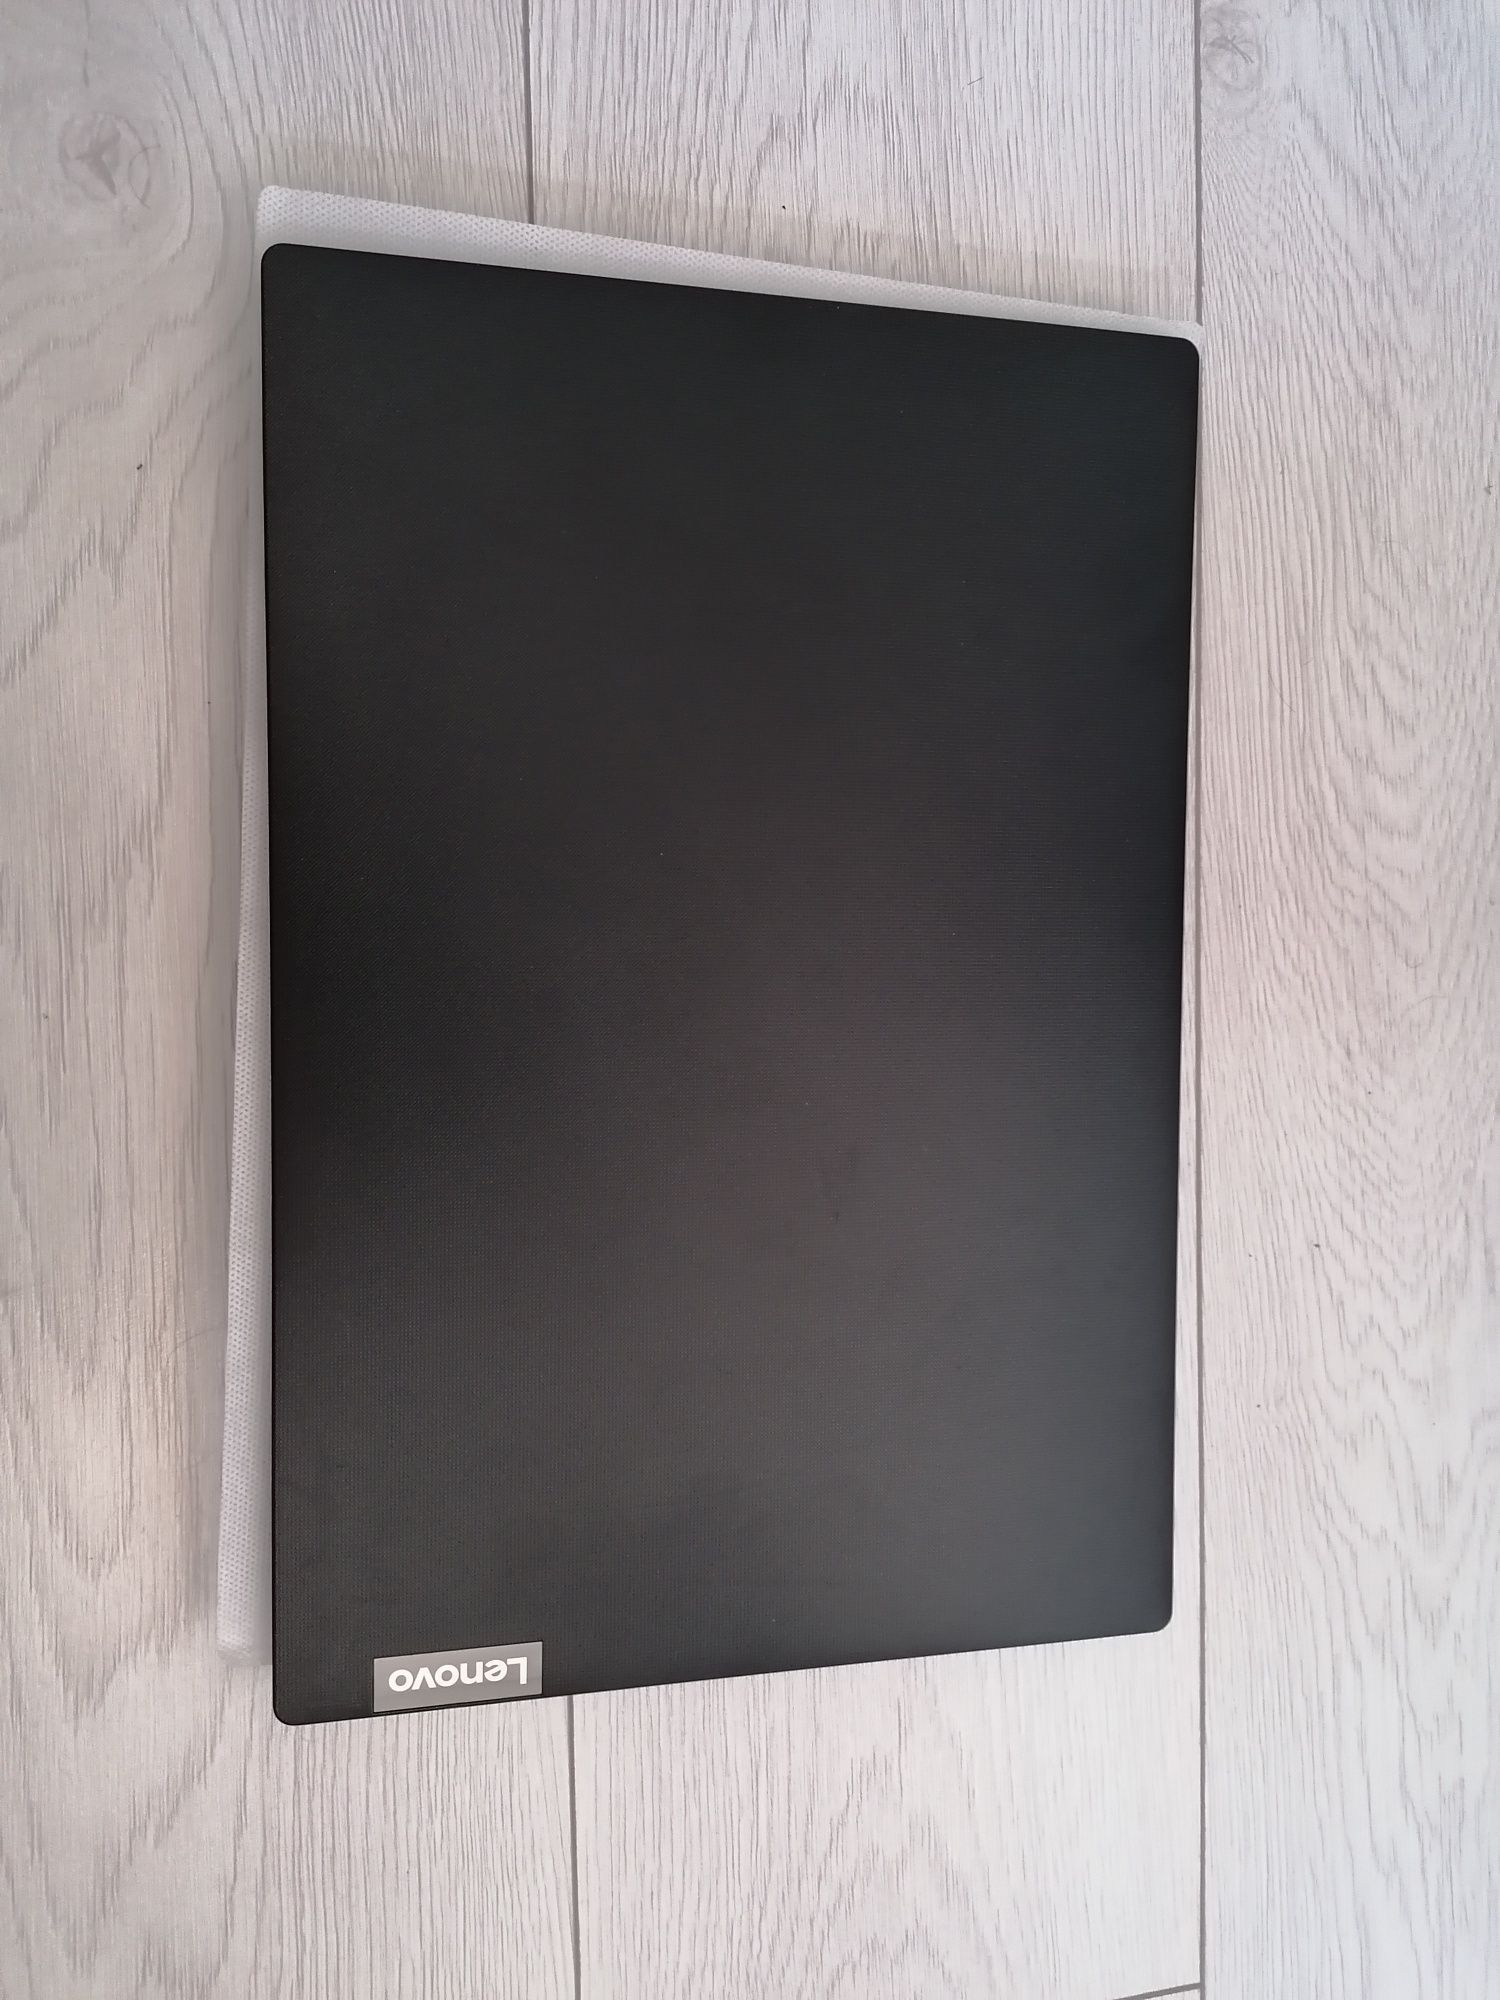 Dezmembrez Lenovo S145-15(placa de baza,display,carcasa,tastatura, inc